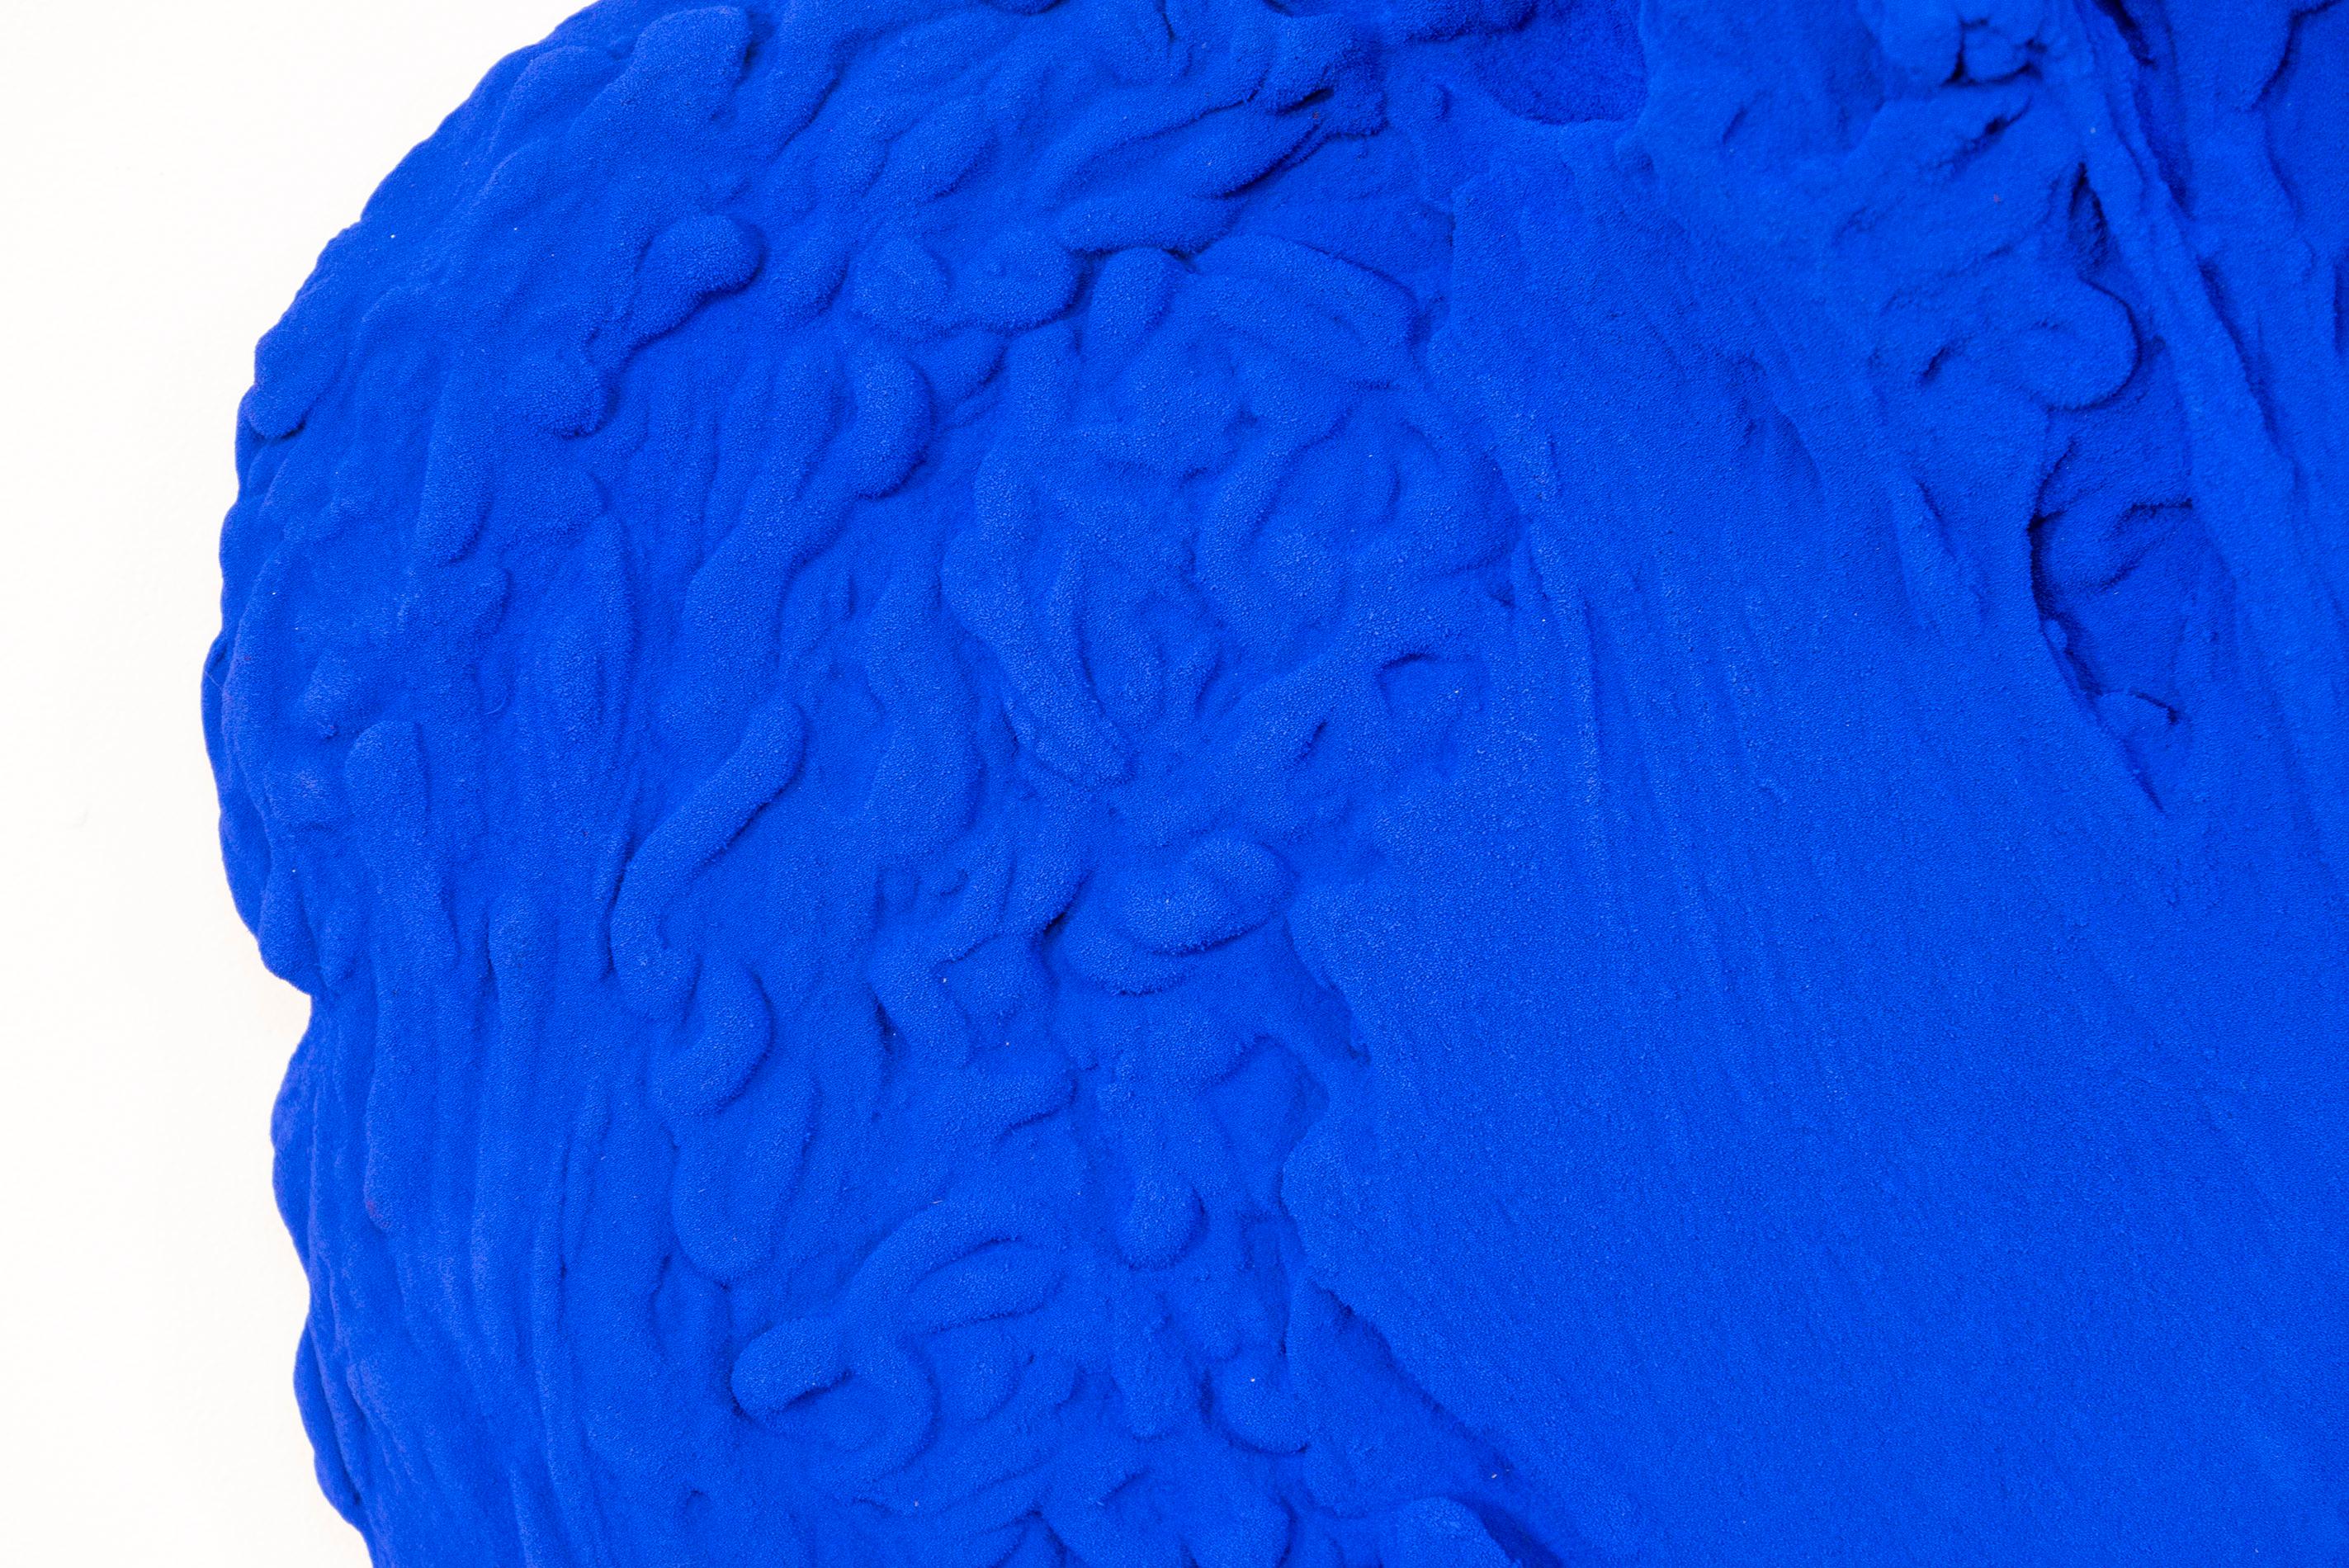 Blue Matter 2 - matte, blue, textured, abstract, mixed media wall sculpture For Sale 1